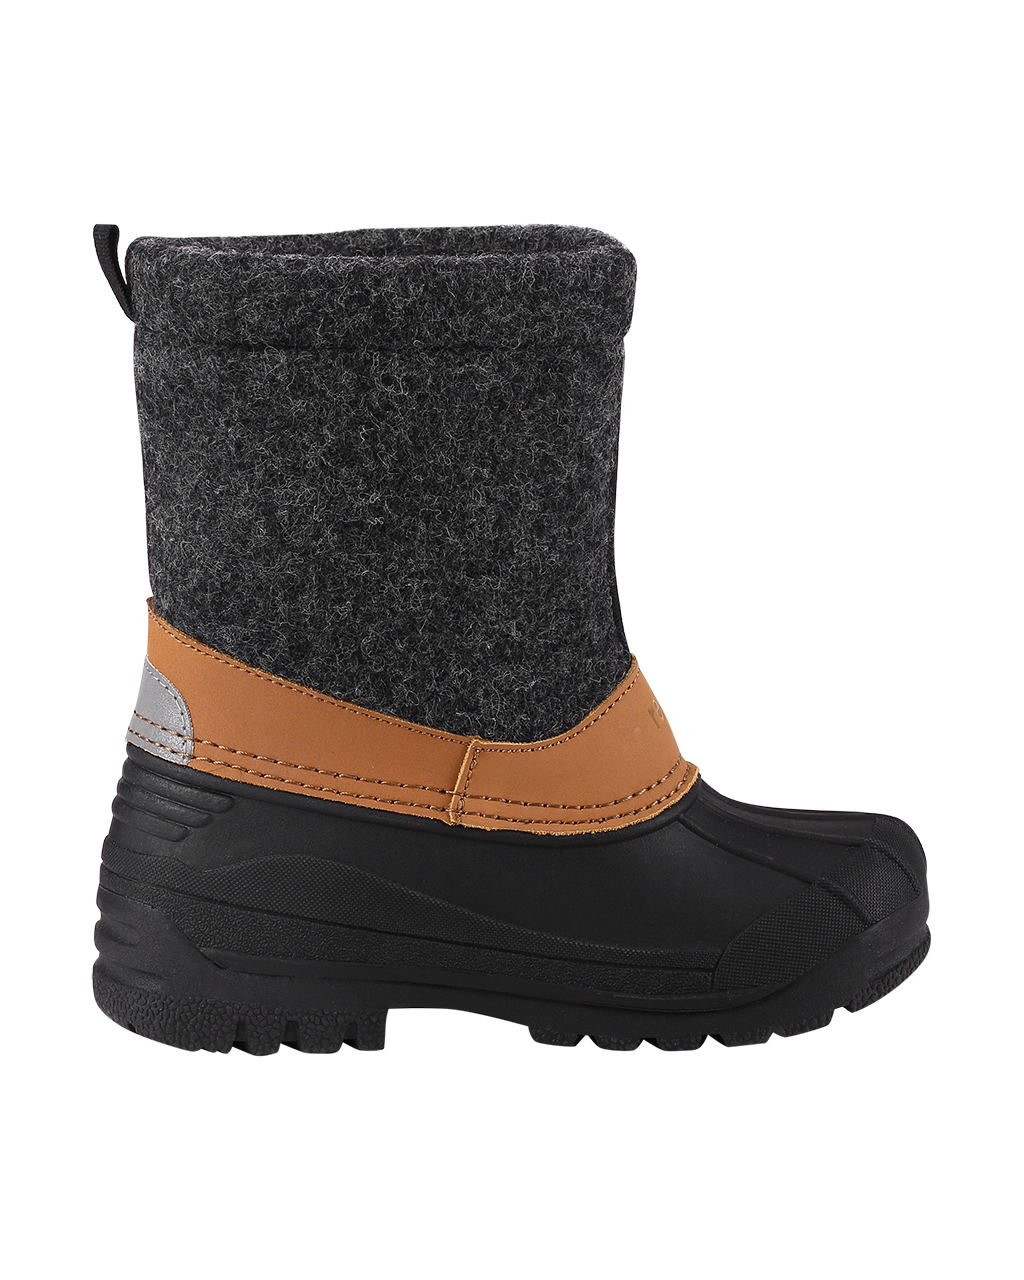 Reima Jalan Winter Boots JR Black (Storlek 35)